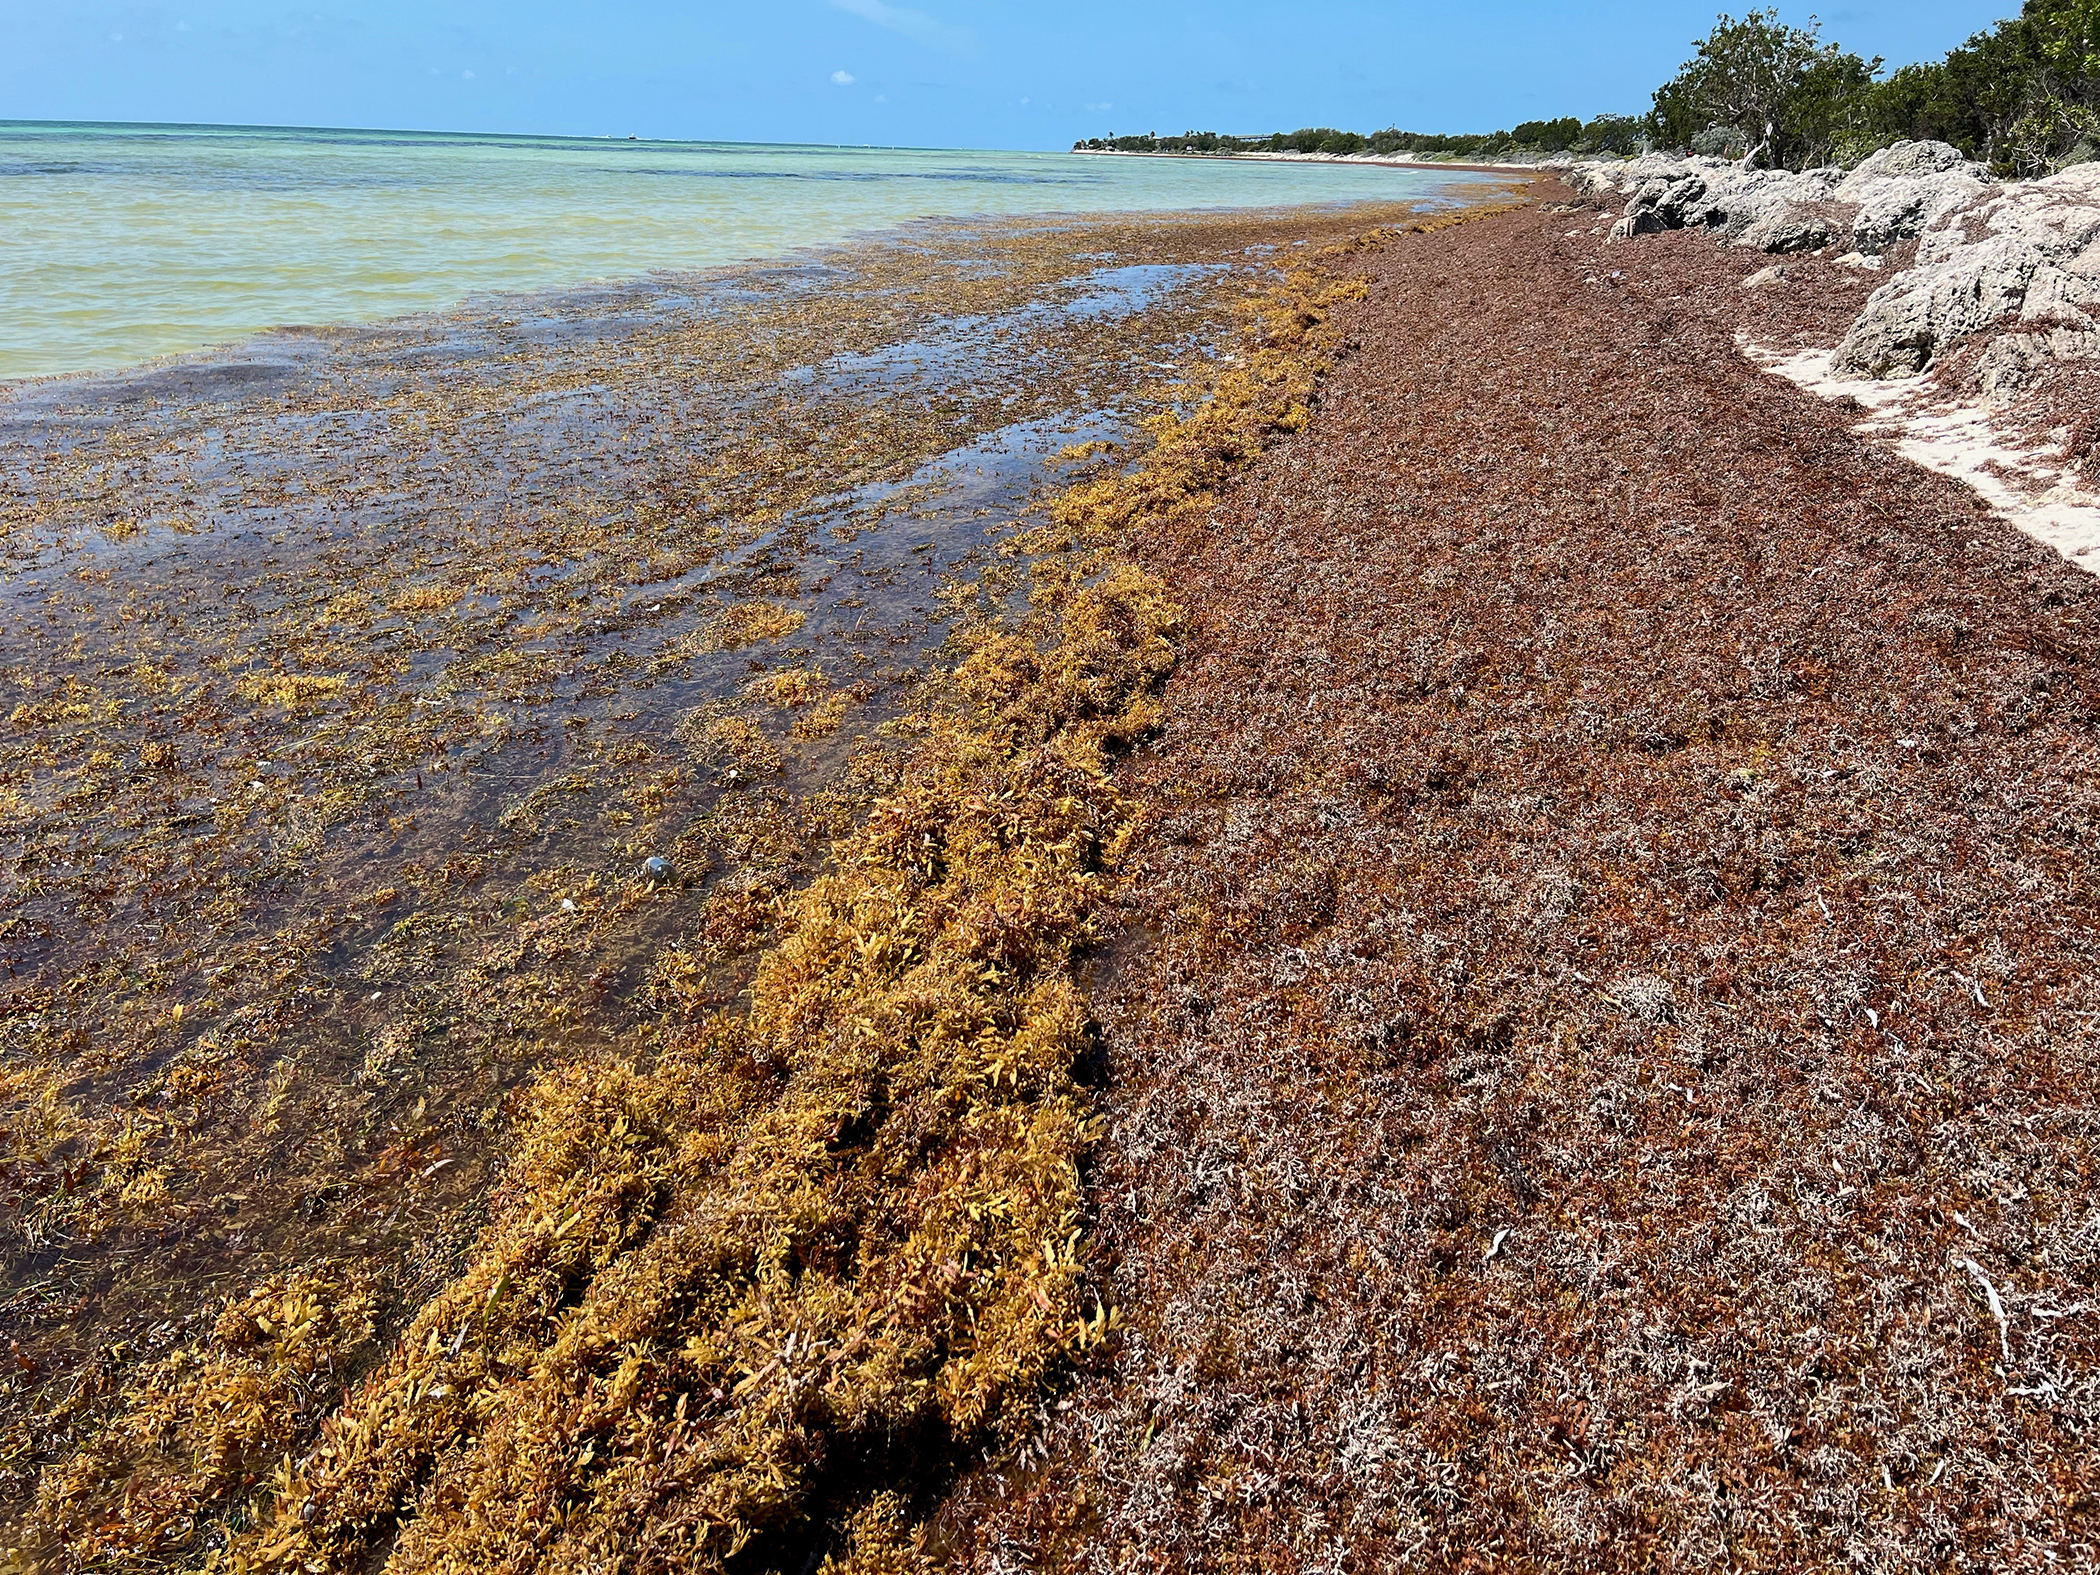 Seaweed washed up on the coastline of the Florida Keys